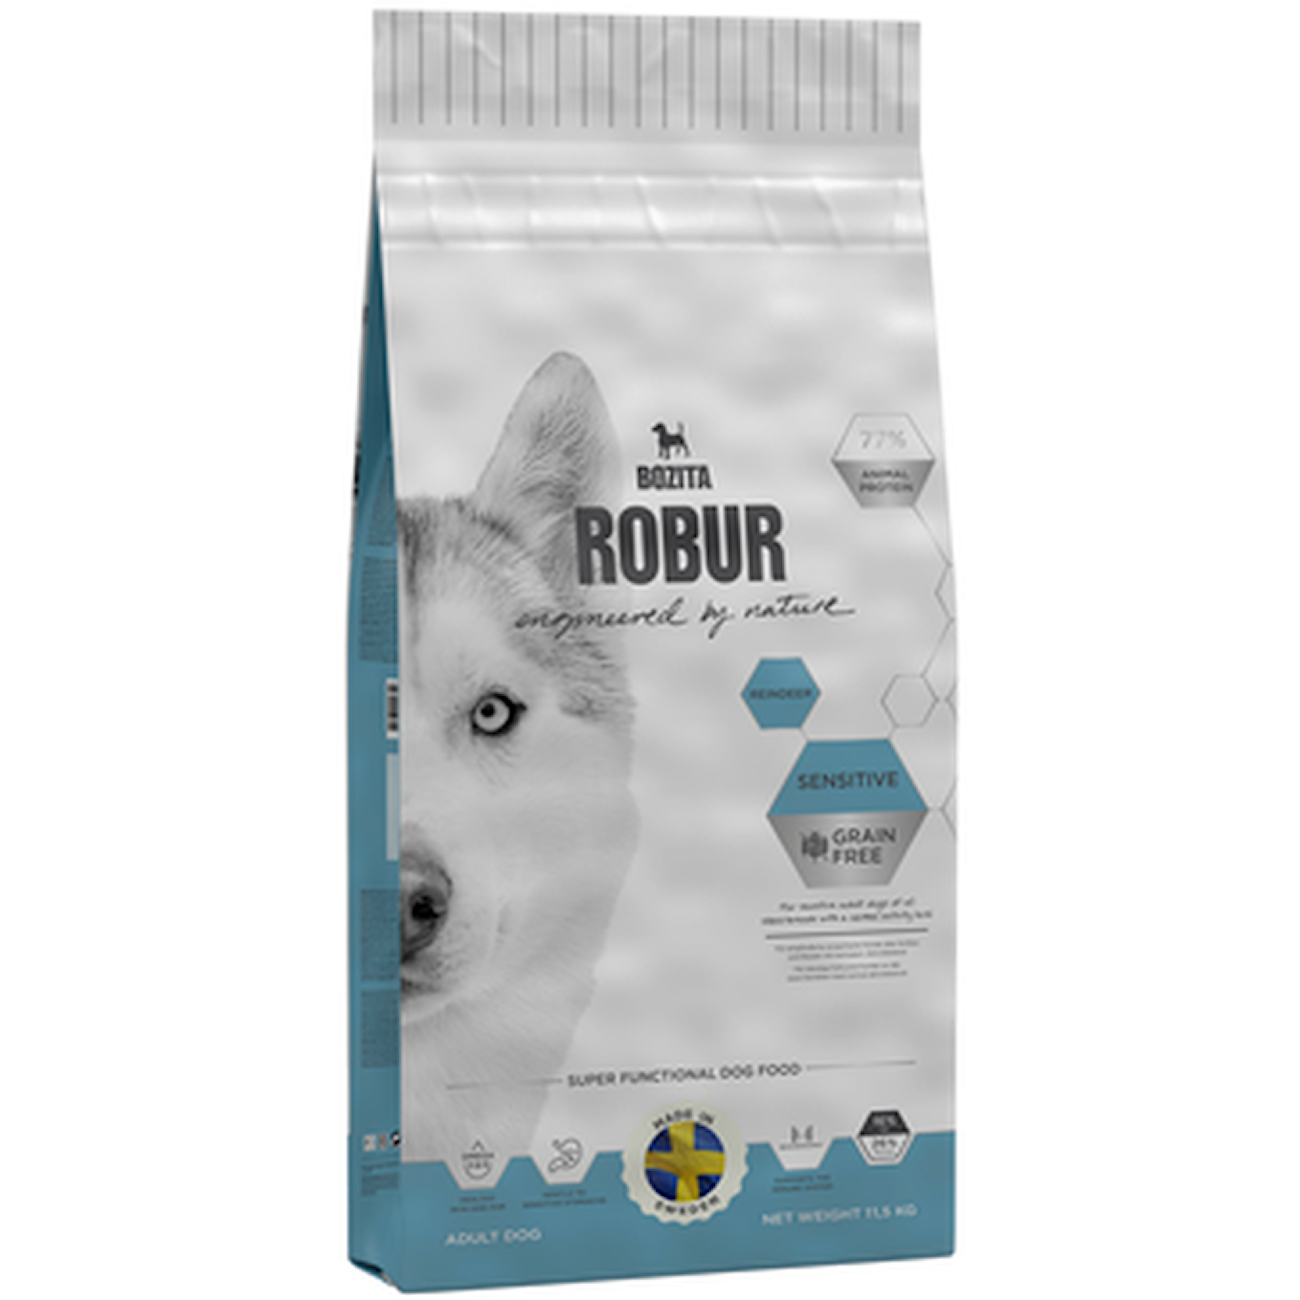 Robur Dog Sensitive Grain Free Reineer